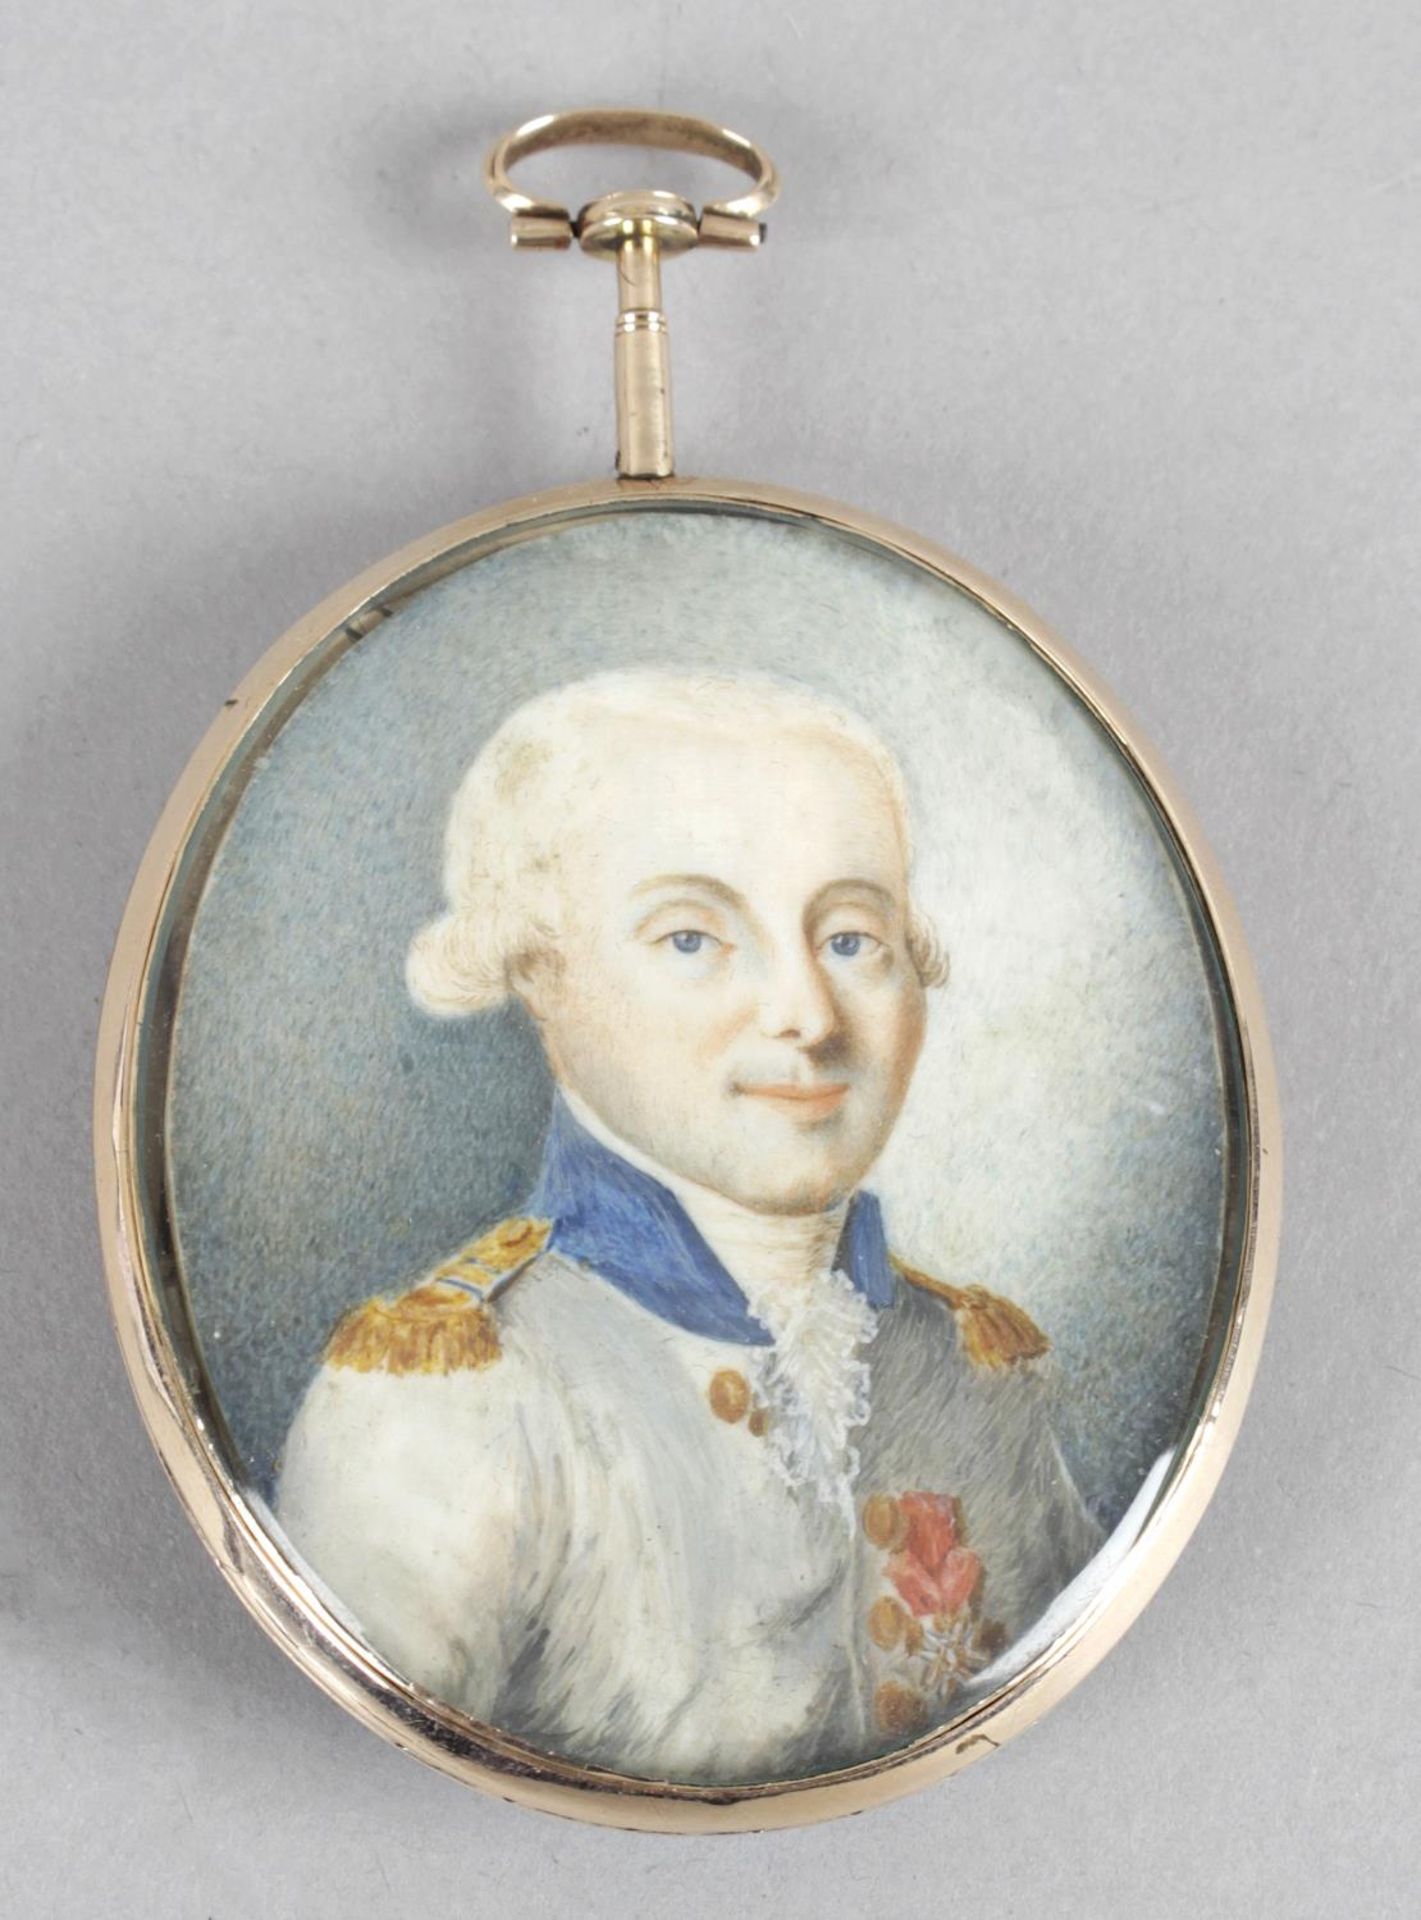 A late 18th century portrait miniature pendant,